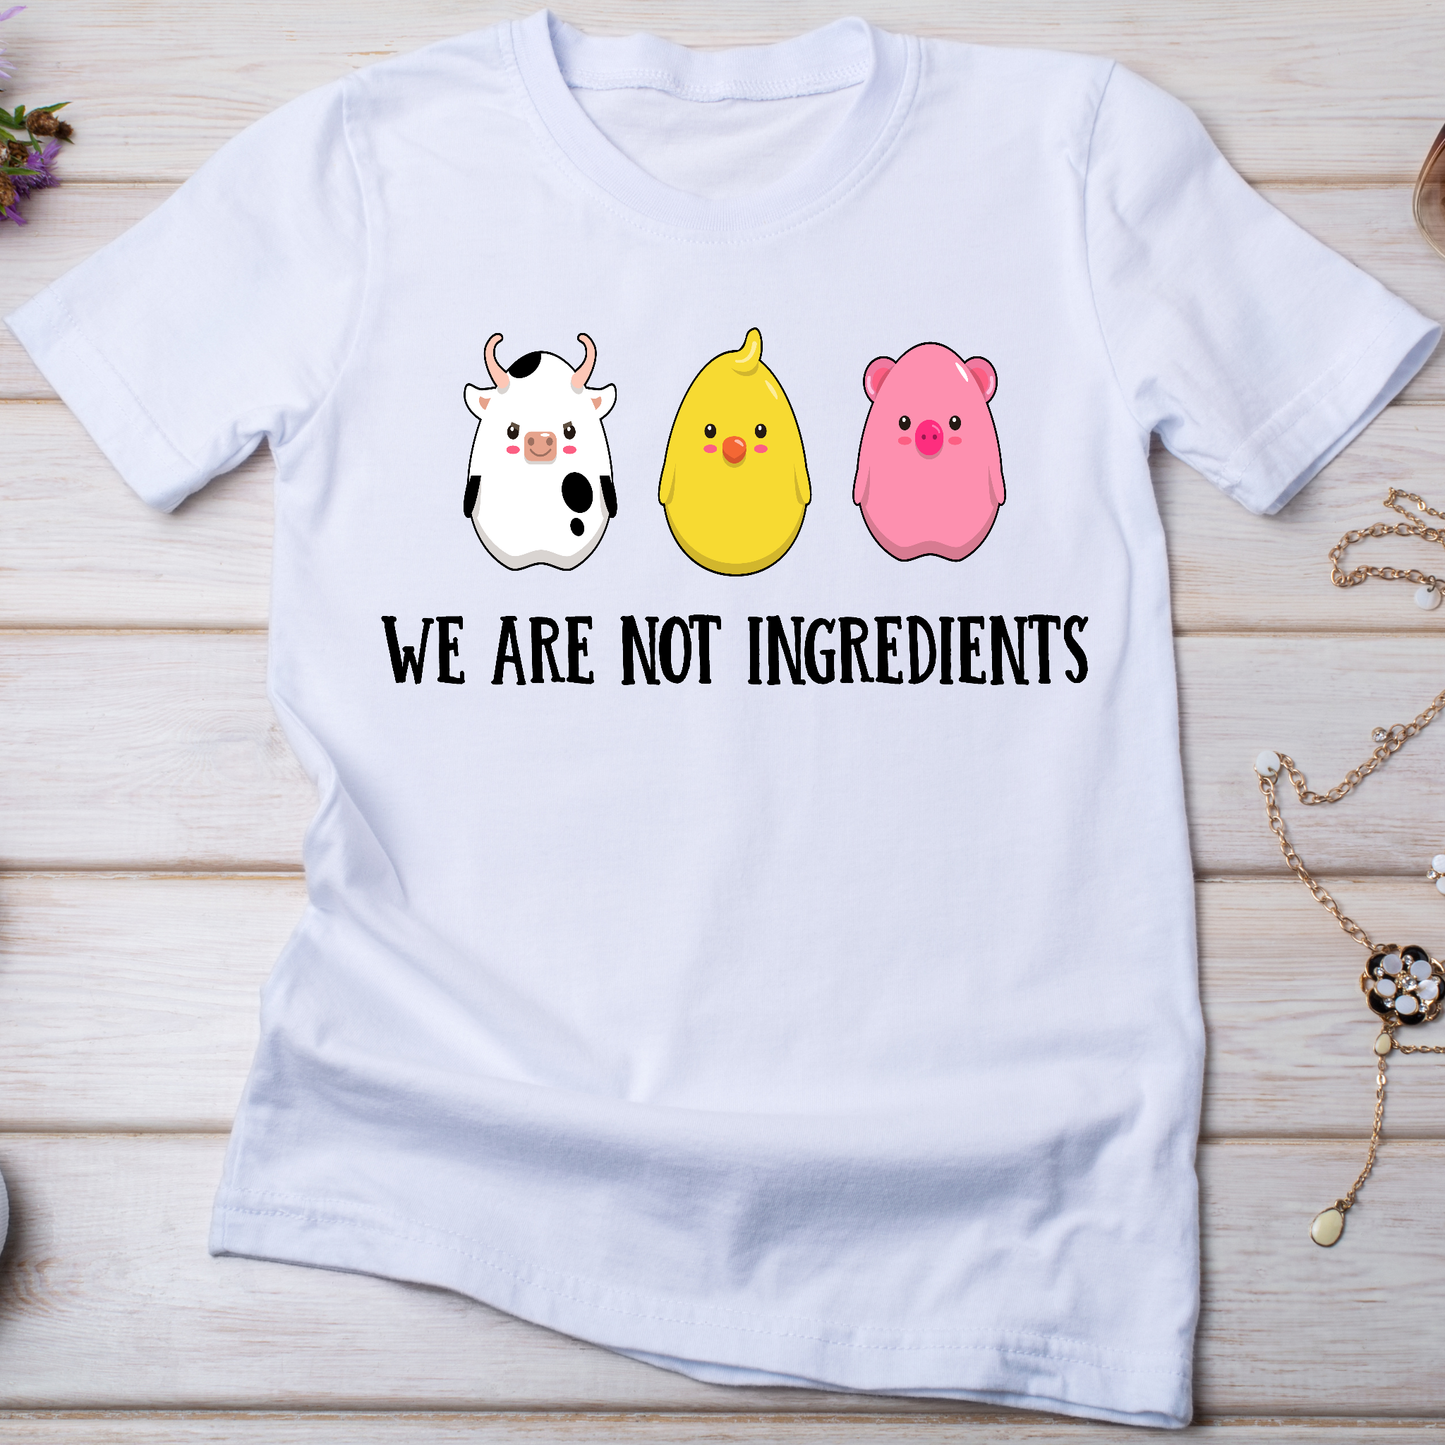 We are not ingredients Women's vegan t-shirt - Premium t-shirt from Lees Krazy Teez - Just $19.95! Shop now at Lees Krazy Teez